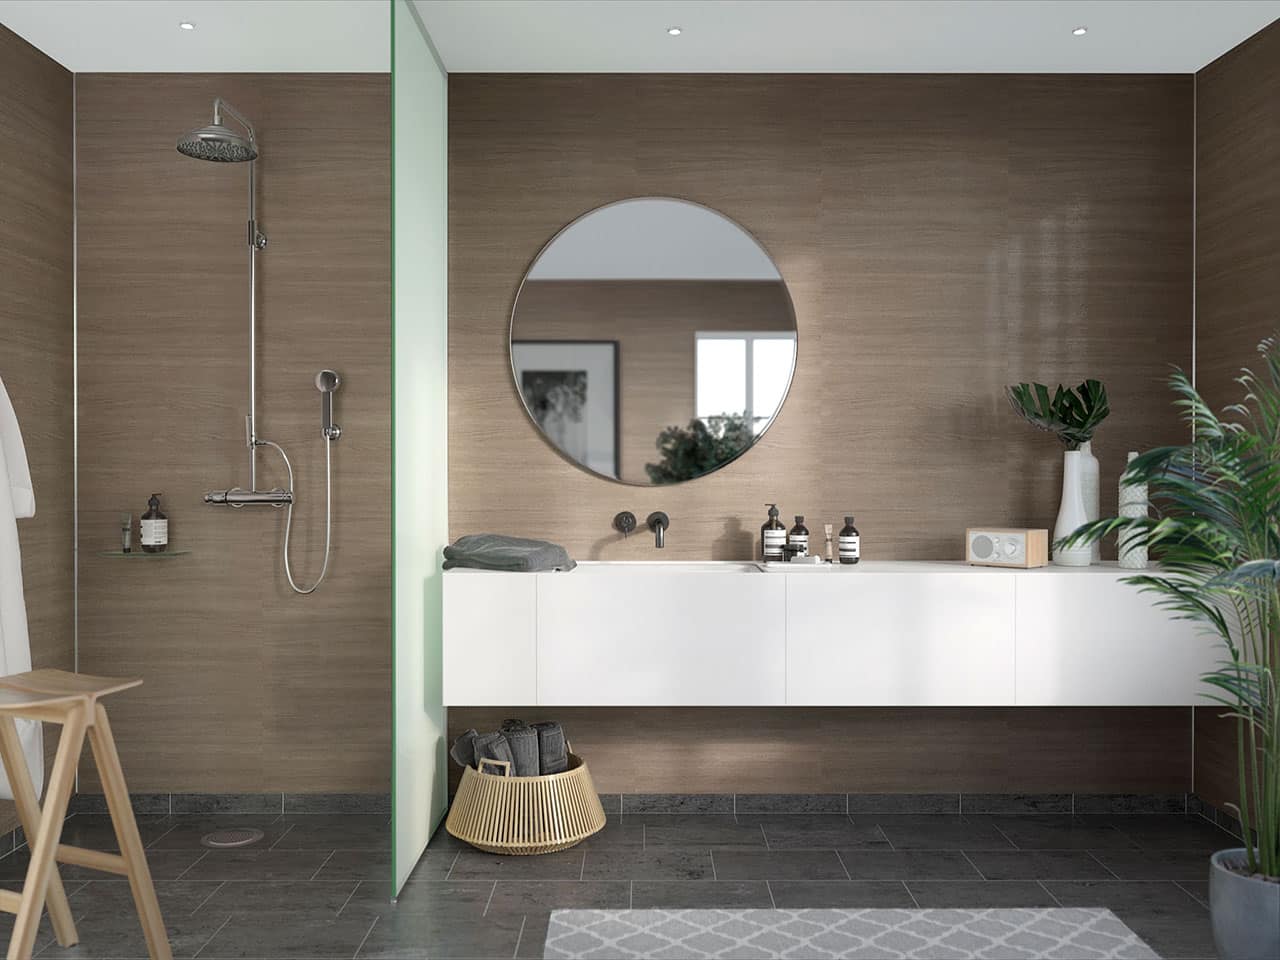 Marina Grey Oak - No Tile Pattern in bathroom and shower walls